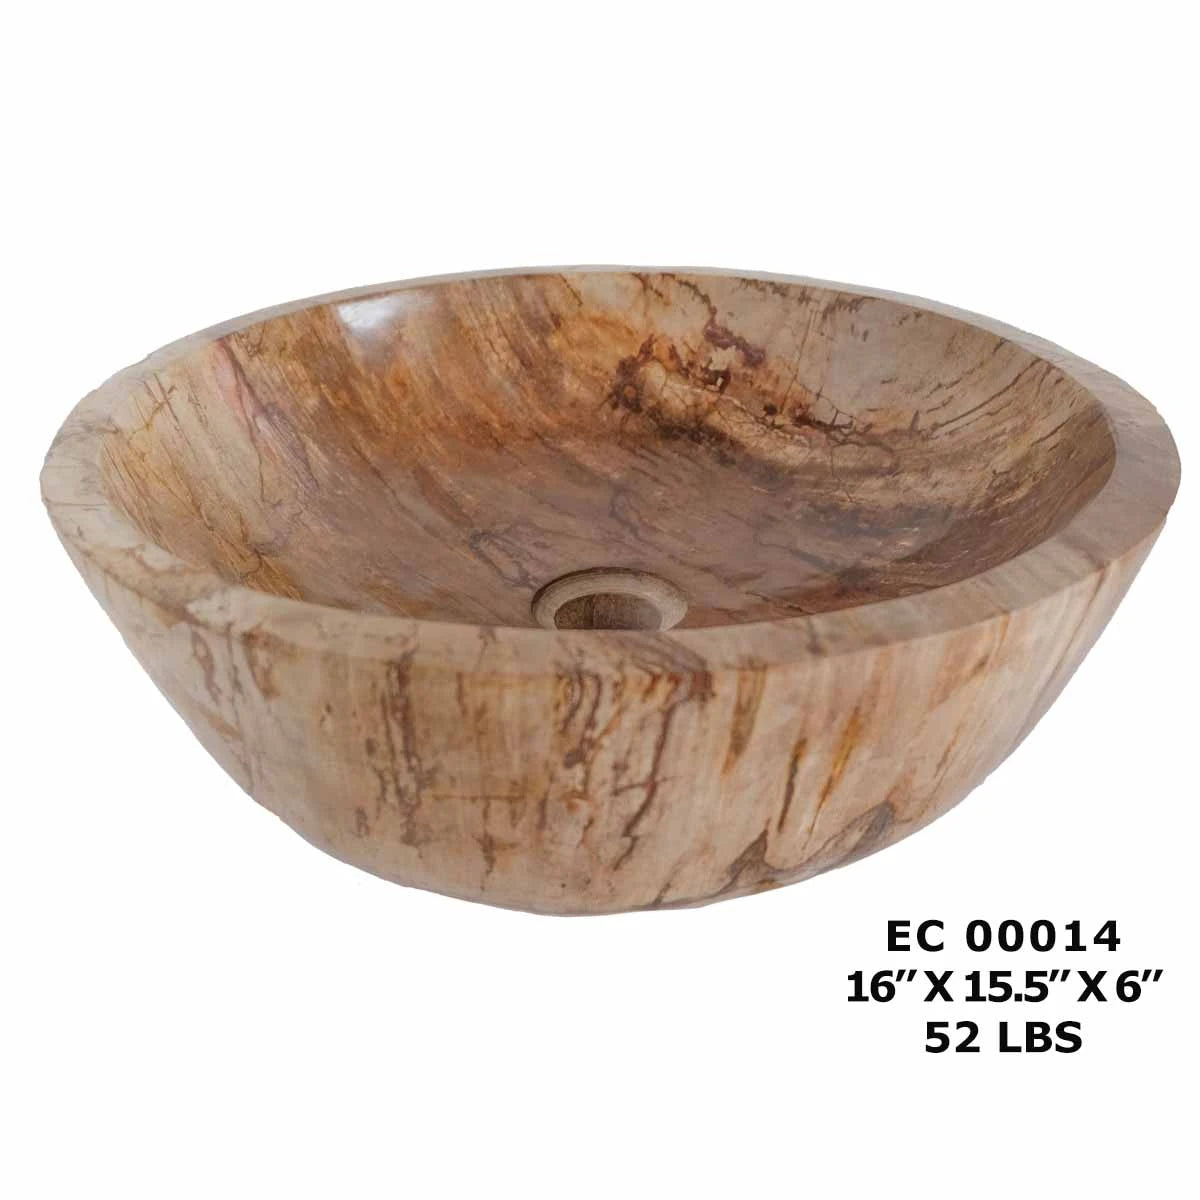 Petrified Wood Kitchen Sink, Round Bowl Stone Basin Sink EC00014